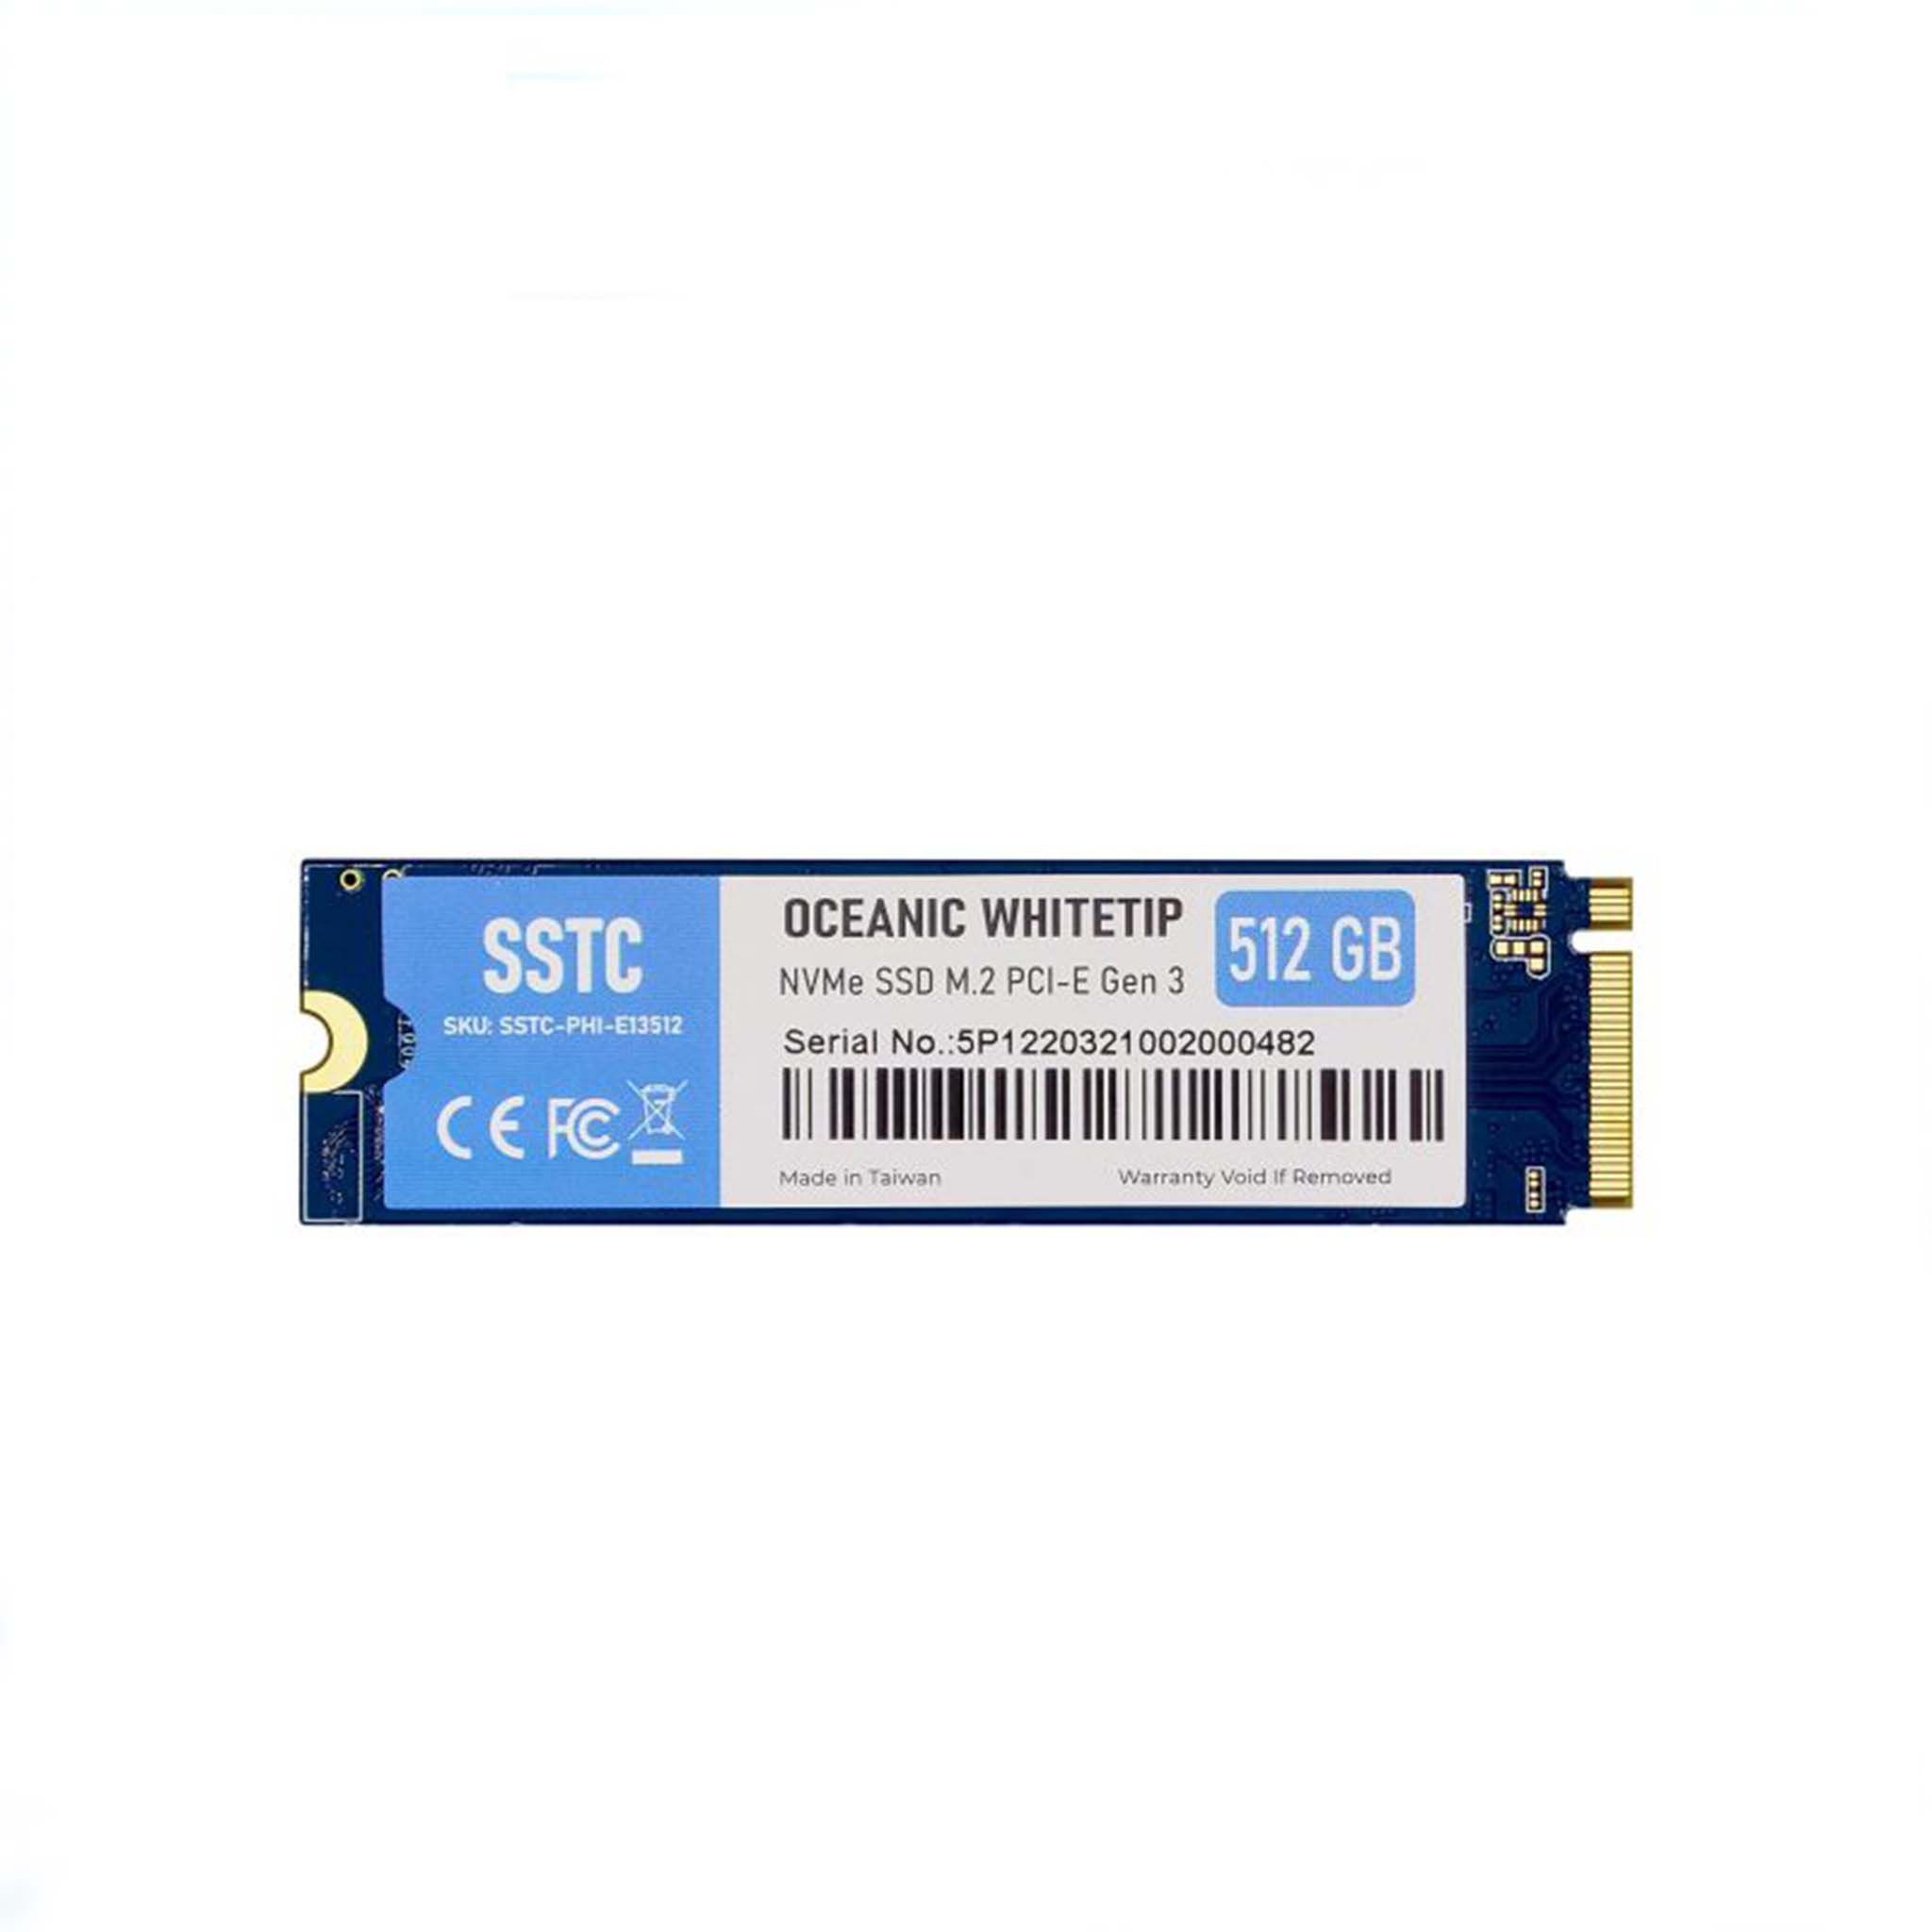  Ổ cứng SSD 512GB SSTC Oceanic Whitetip NVMe M2 PCI-e Gen 3 